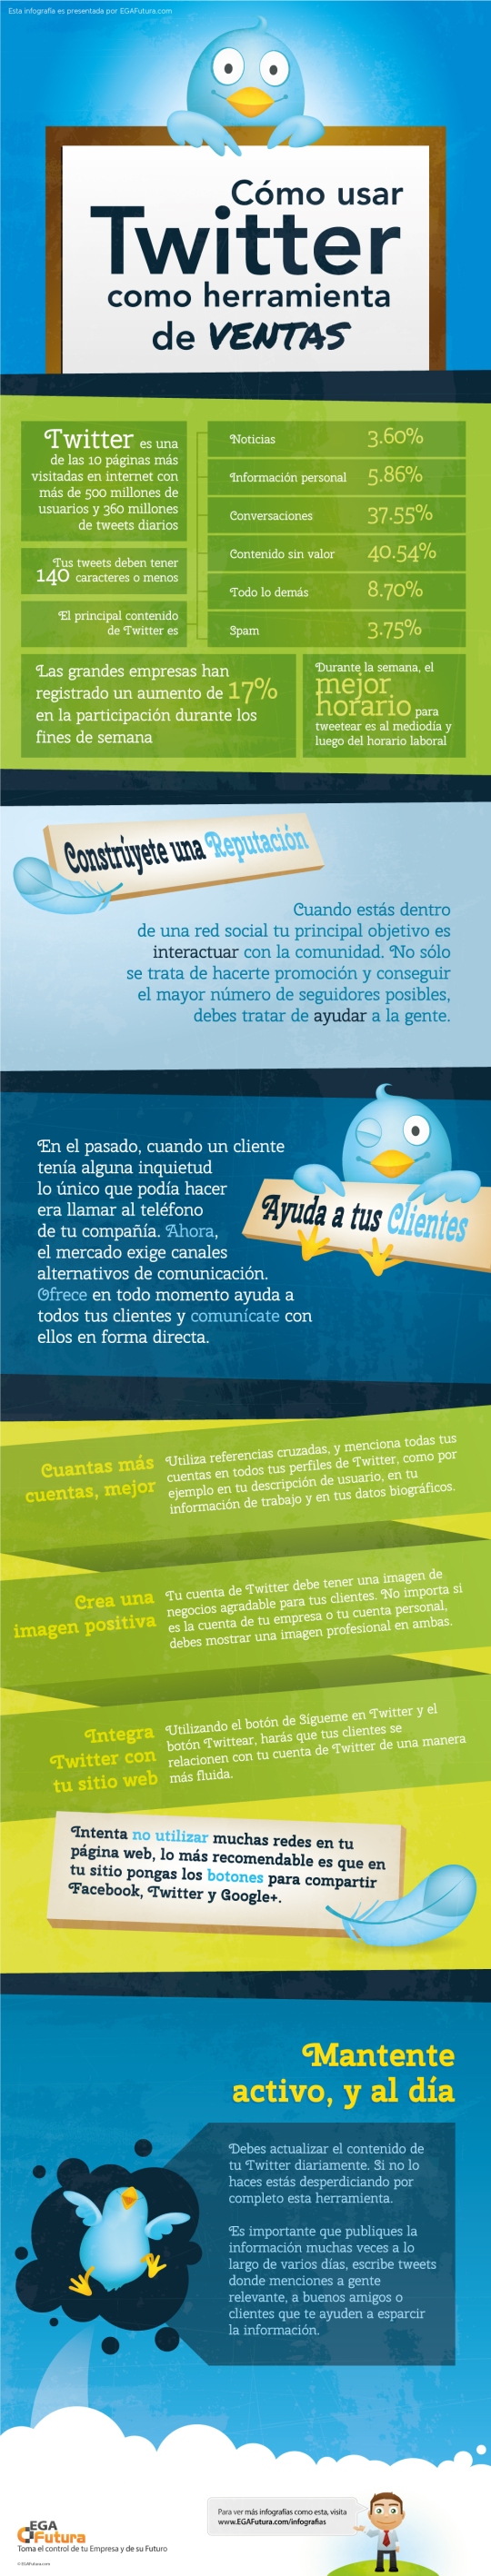 Como_usar_Twitter_Herramienta_Ventas_Infografia_EGAFutura